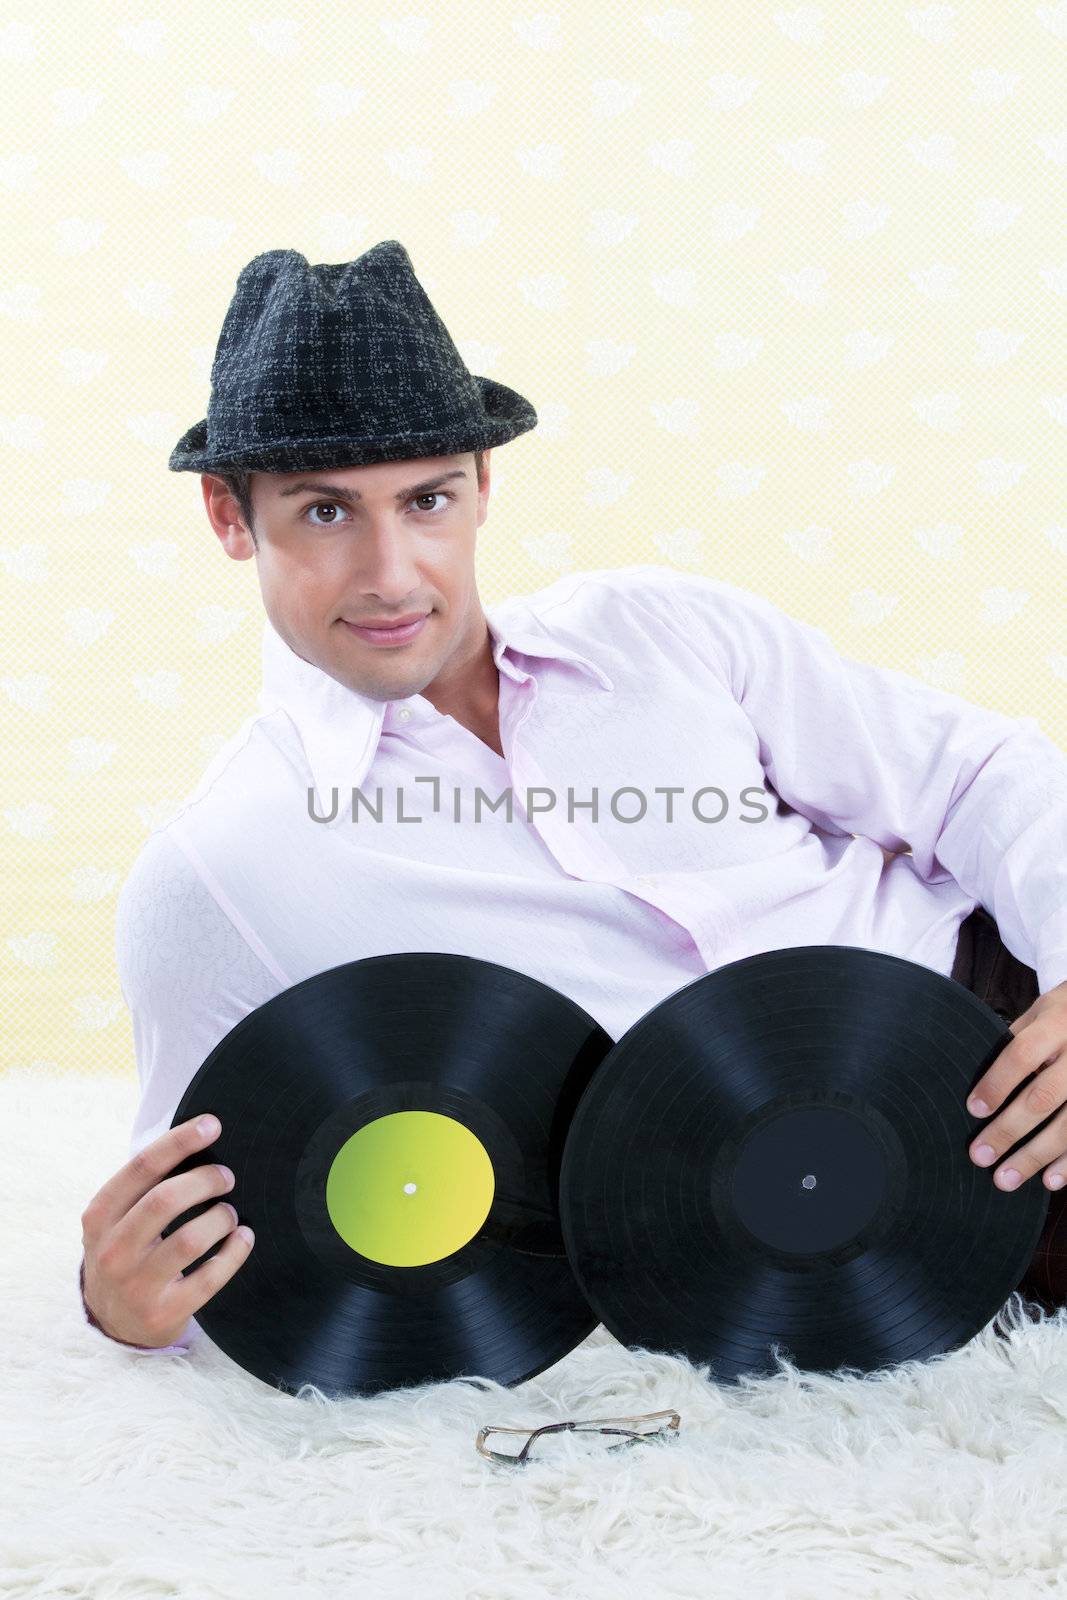 Man posing with vinyl records in studio